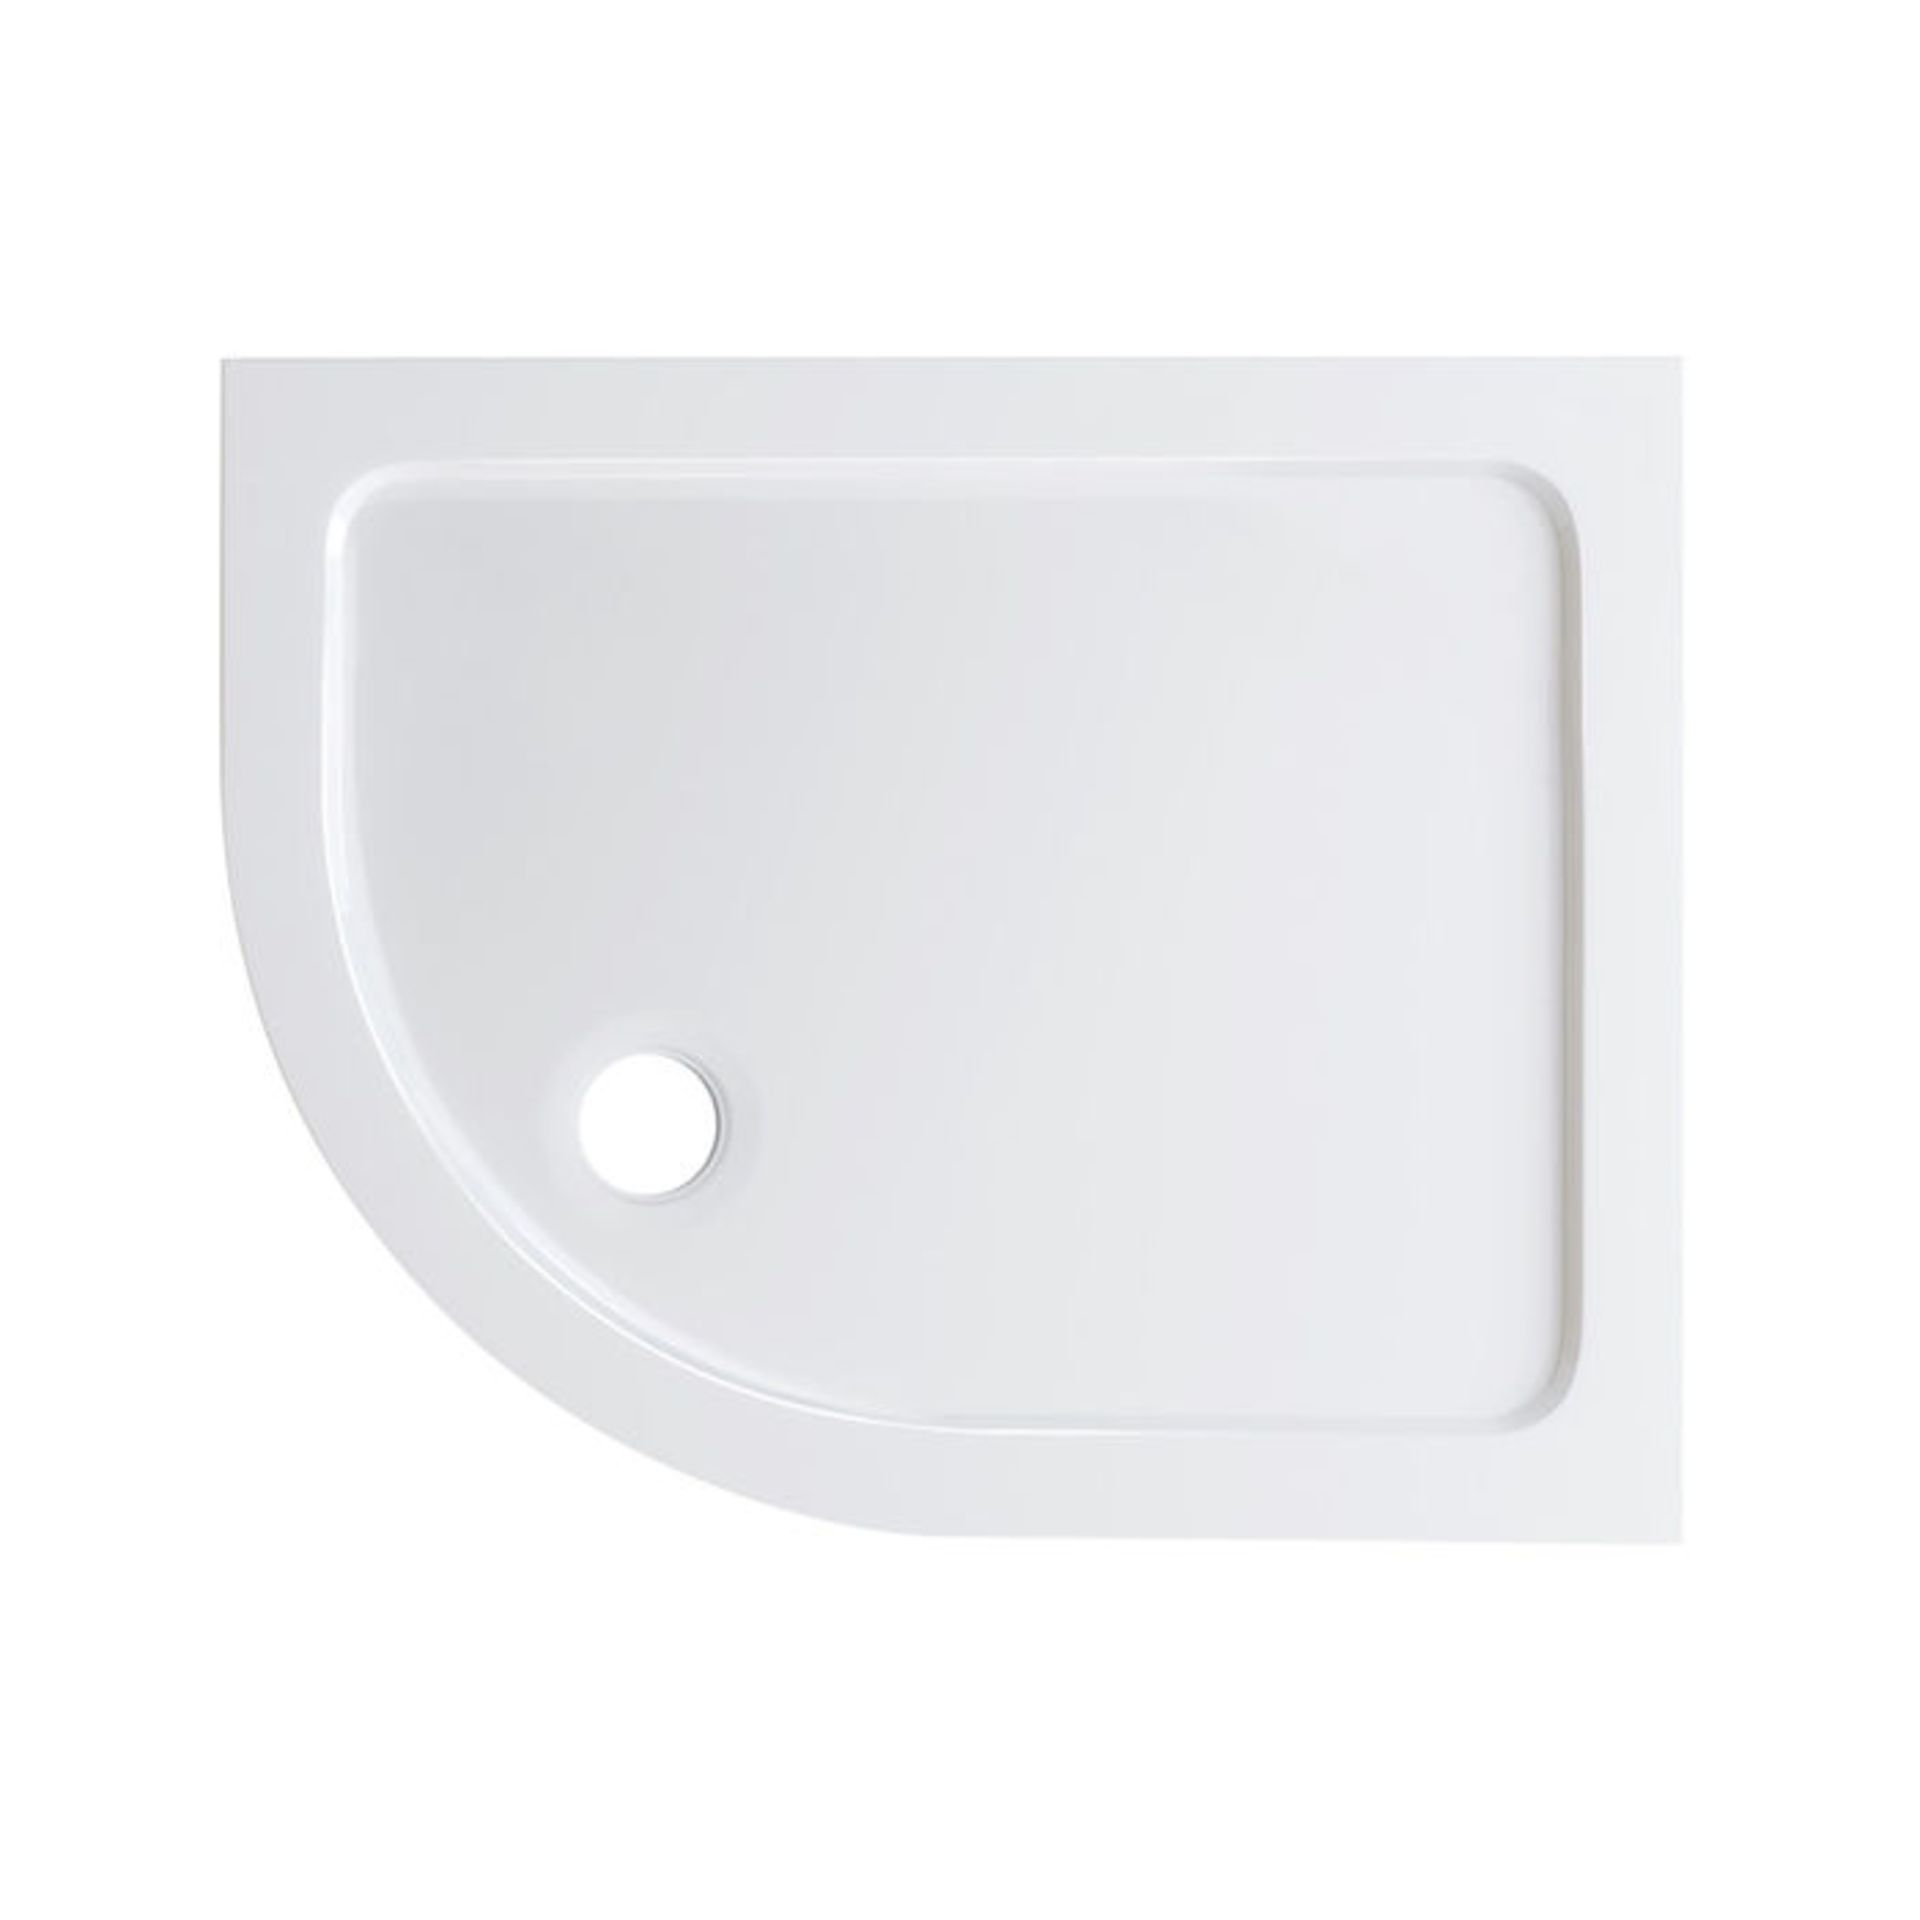 (P74) 1000x800mm Offset Quadrant Ultraslim Stone Shower Tray - Left. Low profile ultra slim design - Image 3 of 3